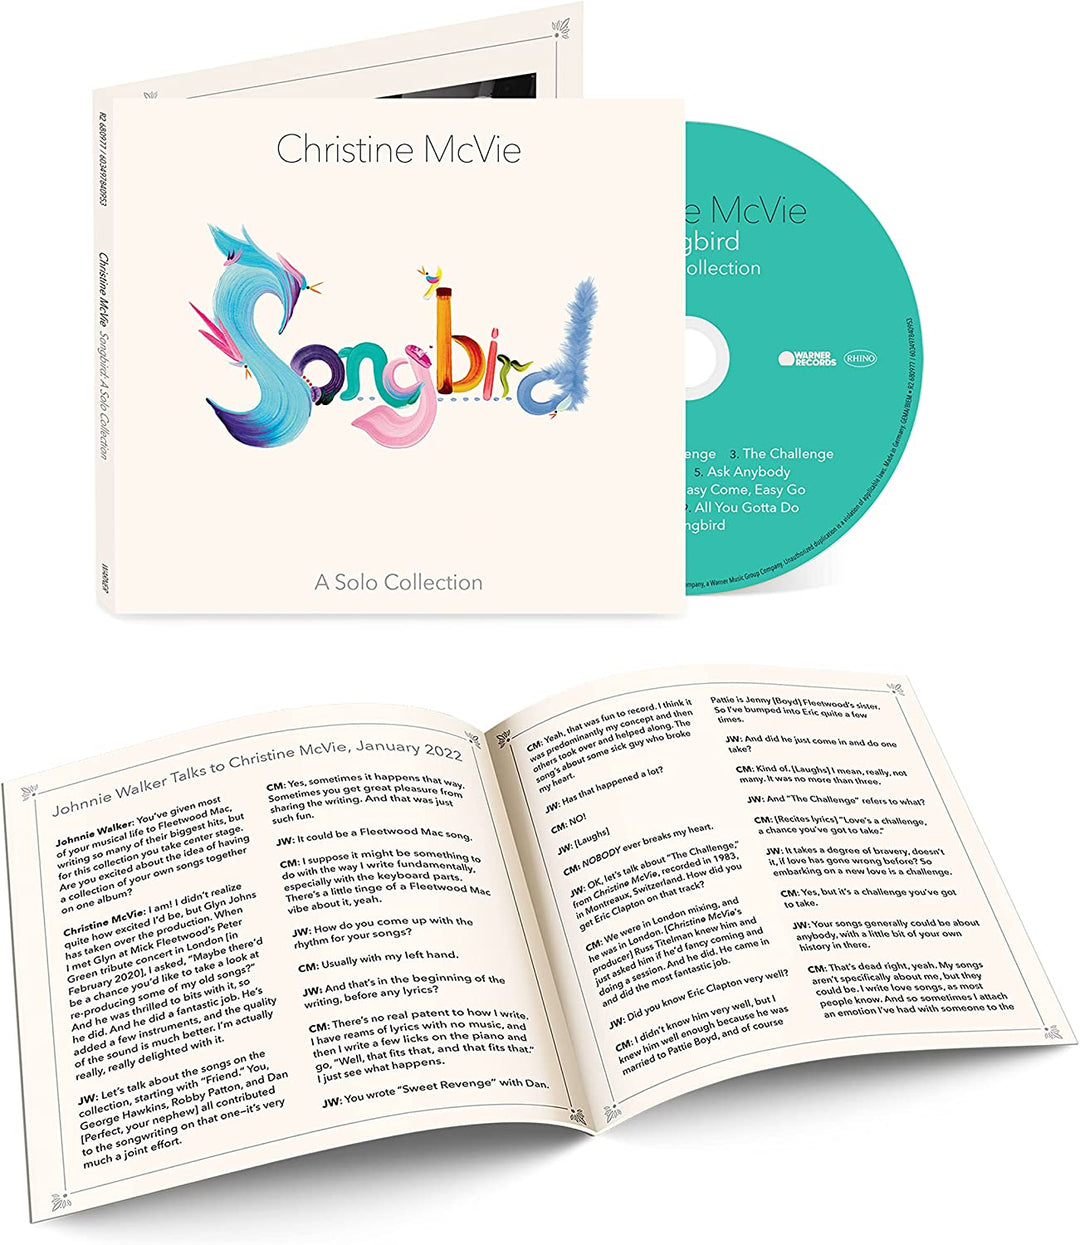 Christine McVie - Songbird (A Solo Collection) [Audio CD]